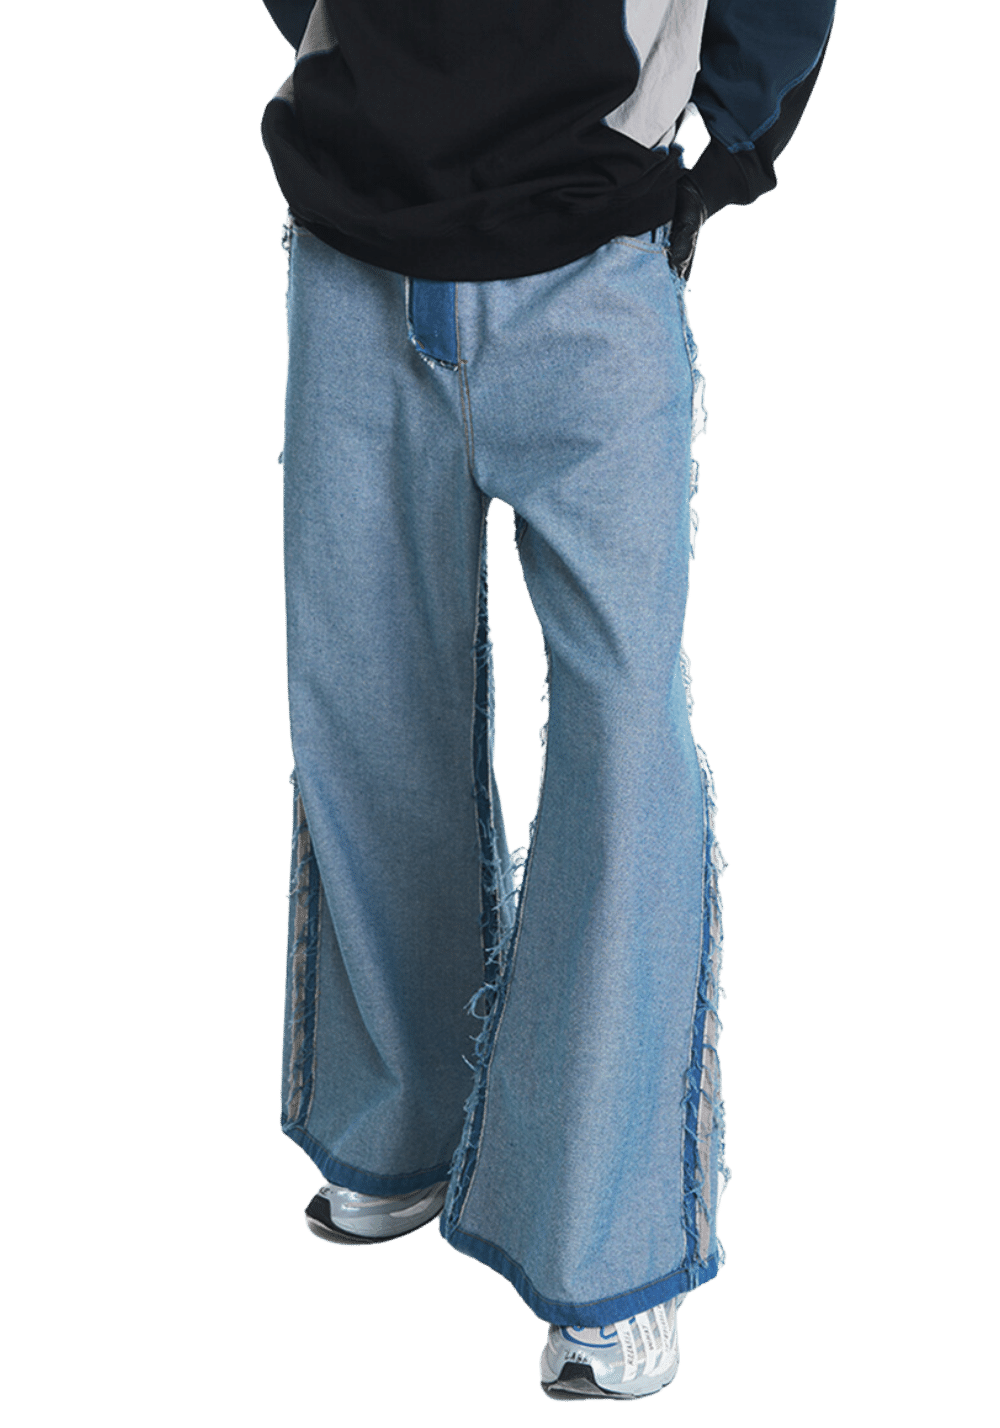 Deconstructed Side Seam Patchwork Jeans - PSYLOS 1, Deconstructed Side Seam Patchwork Jeans, Pants, RELABEL, PSYLOS 1